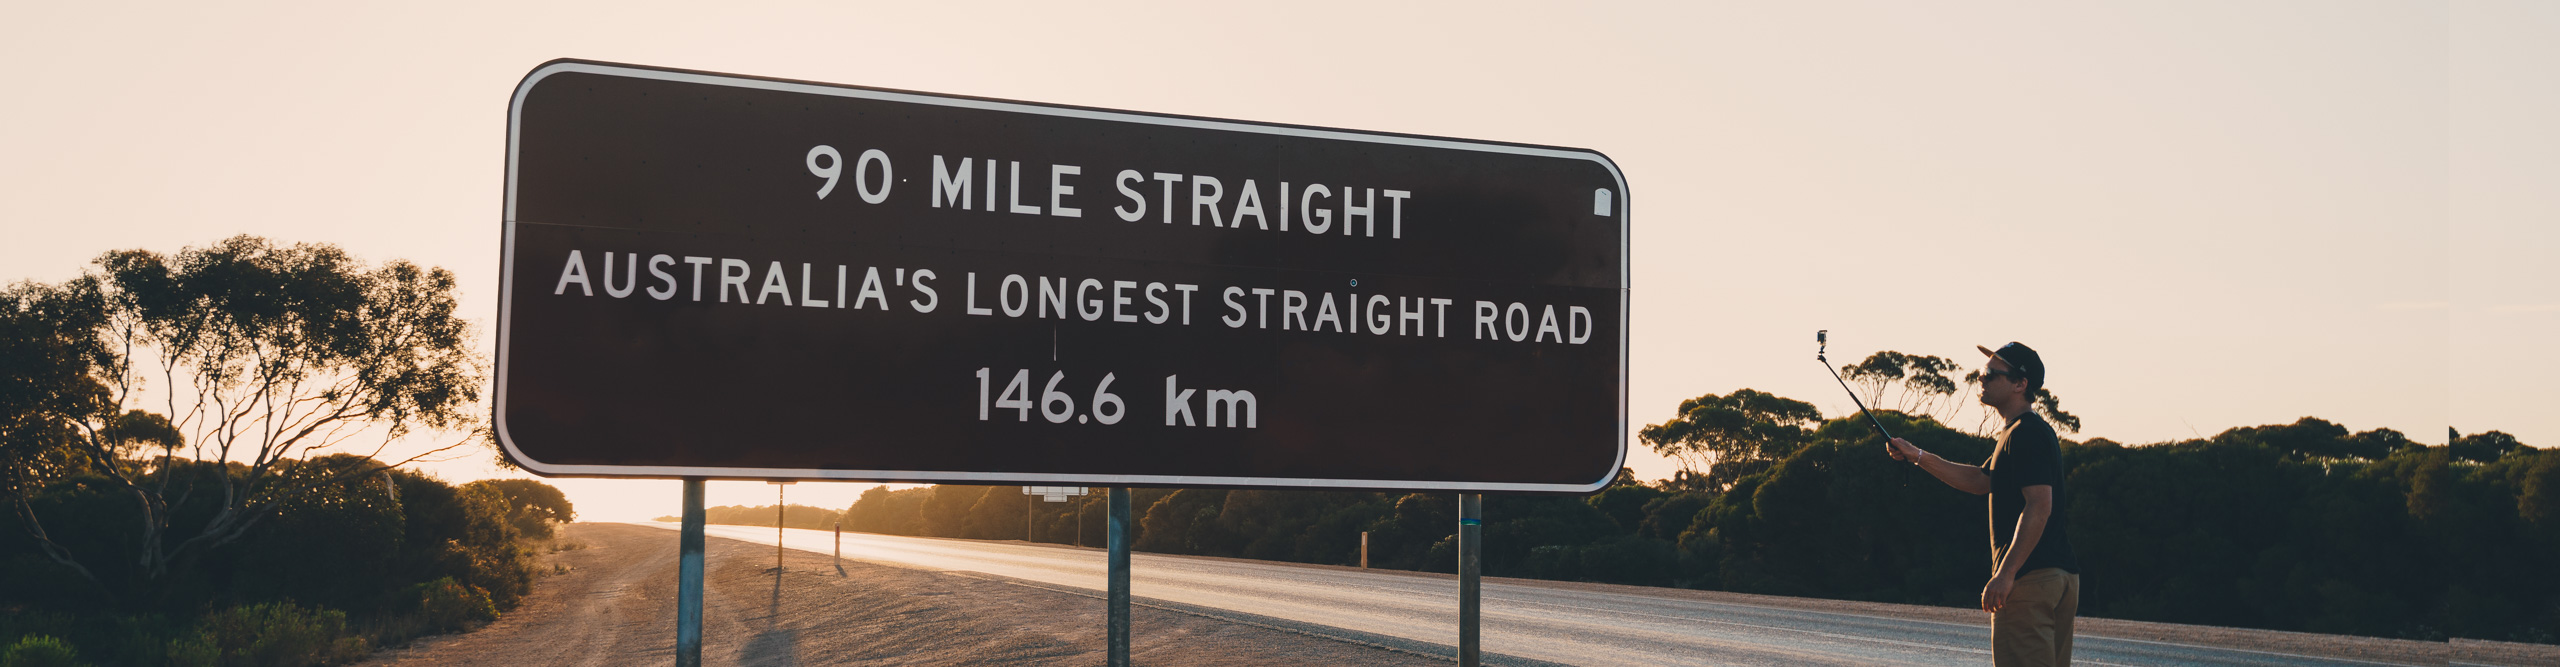 Australia's longest straight road on the Nullabor Plain in Western Australia